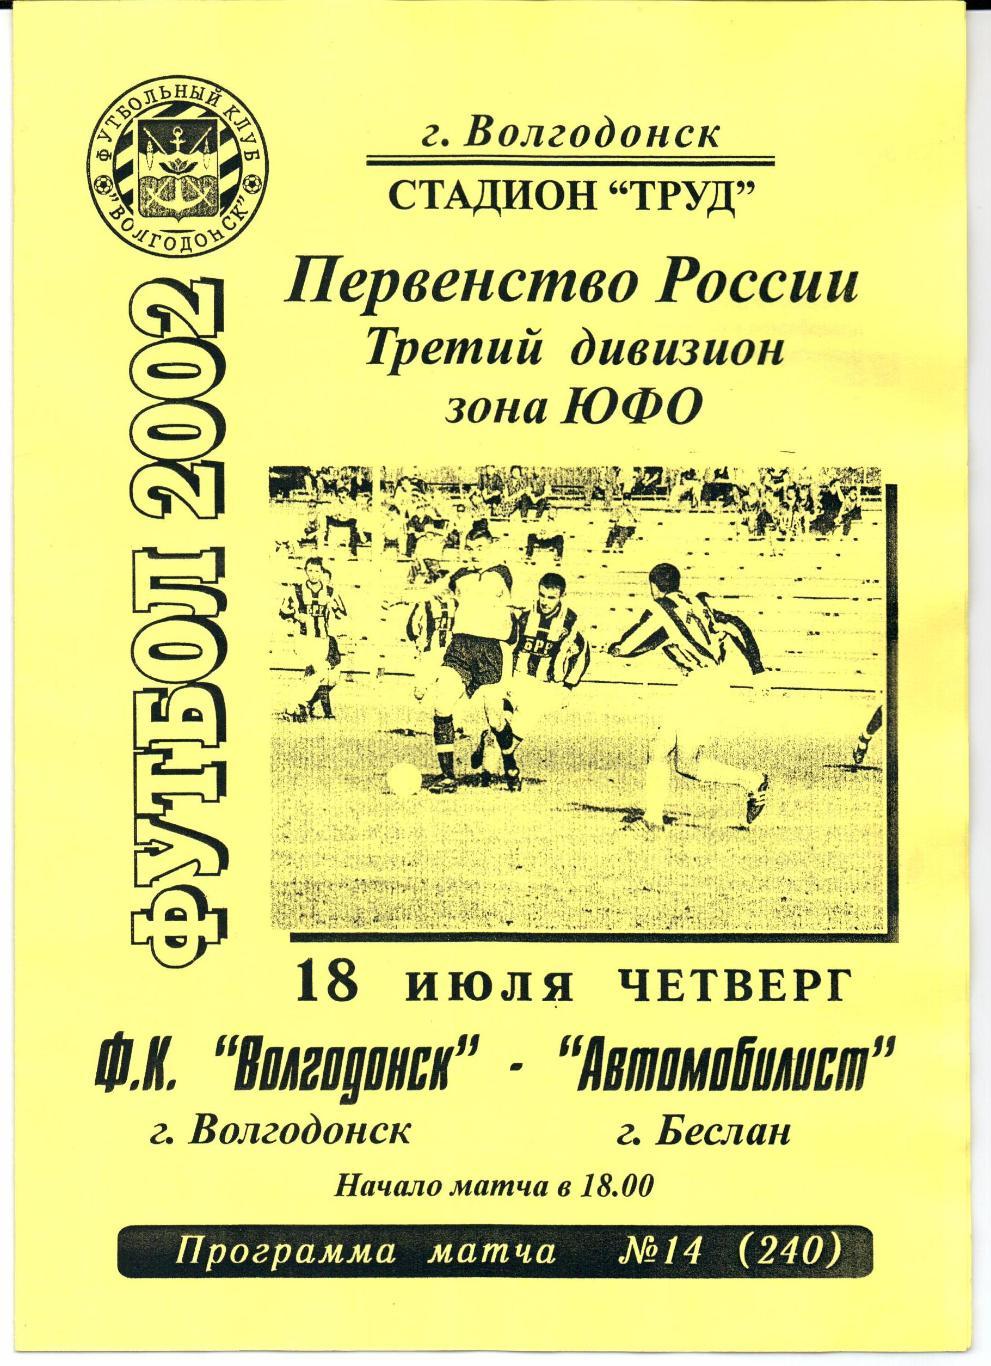 3 дивизион зона ЮФО ФК Волгодонск(Волгодонск)-Автом обилист(Беслан)18.07.2002